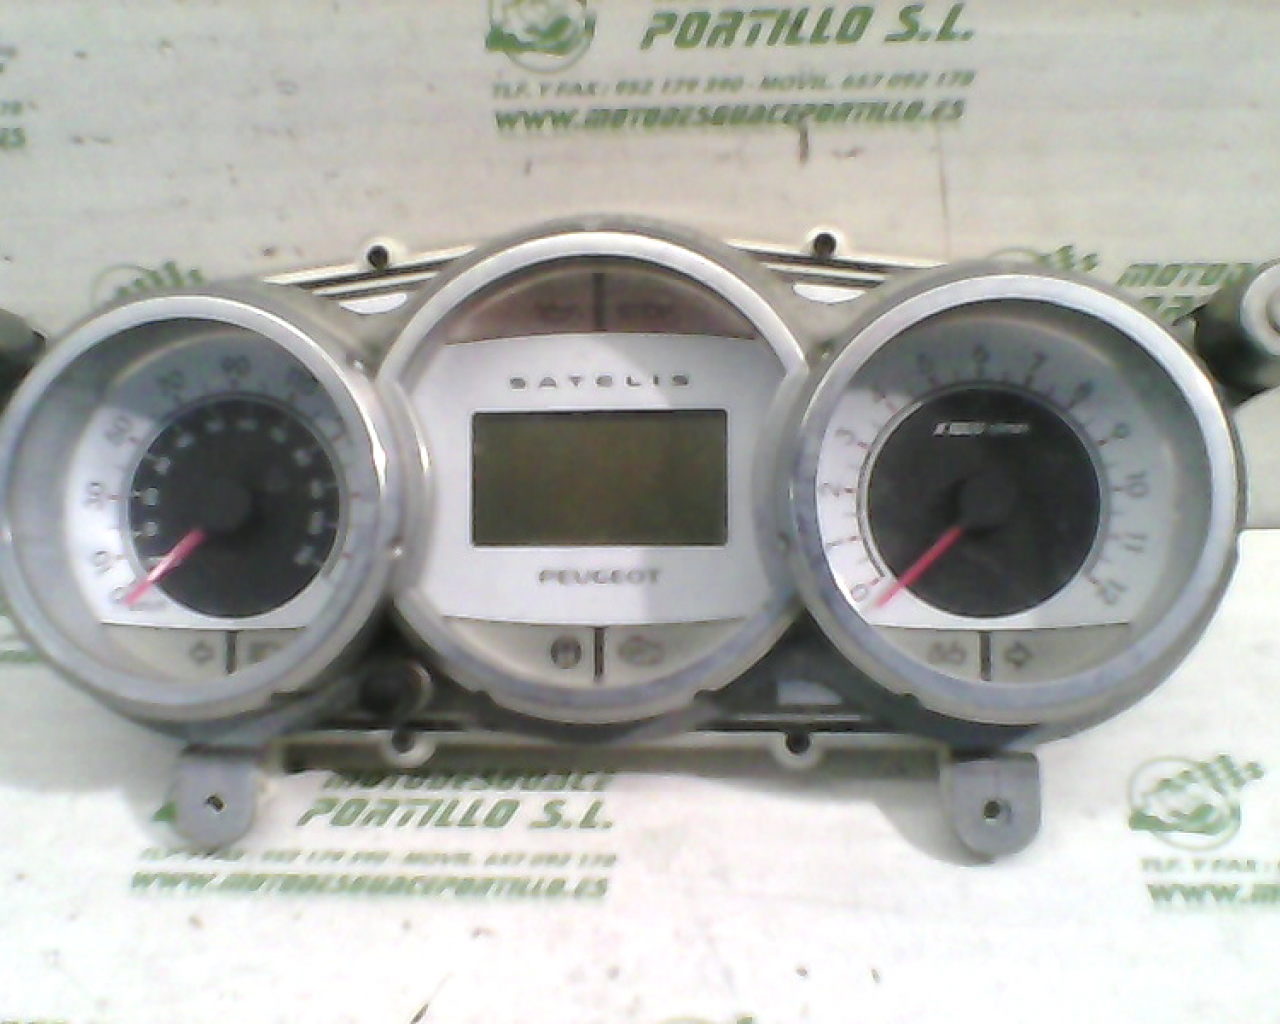 Cuentakilómetros Peugeot Satelis 125 (2006-2007)